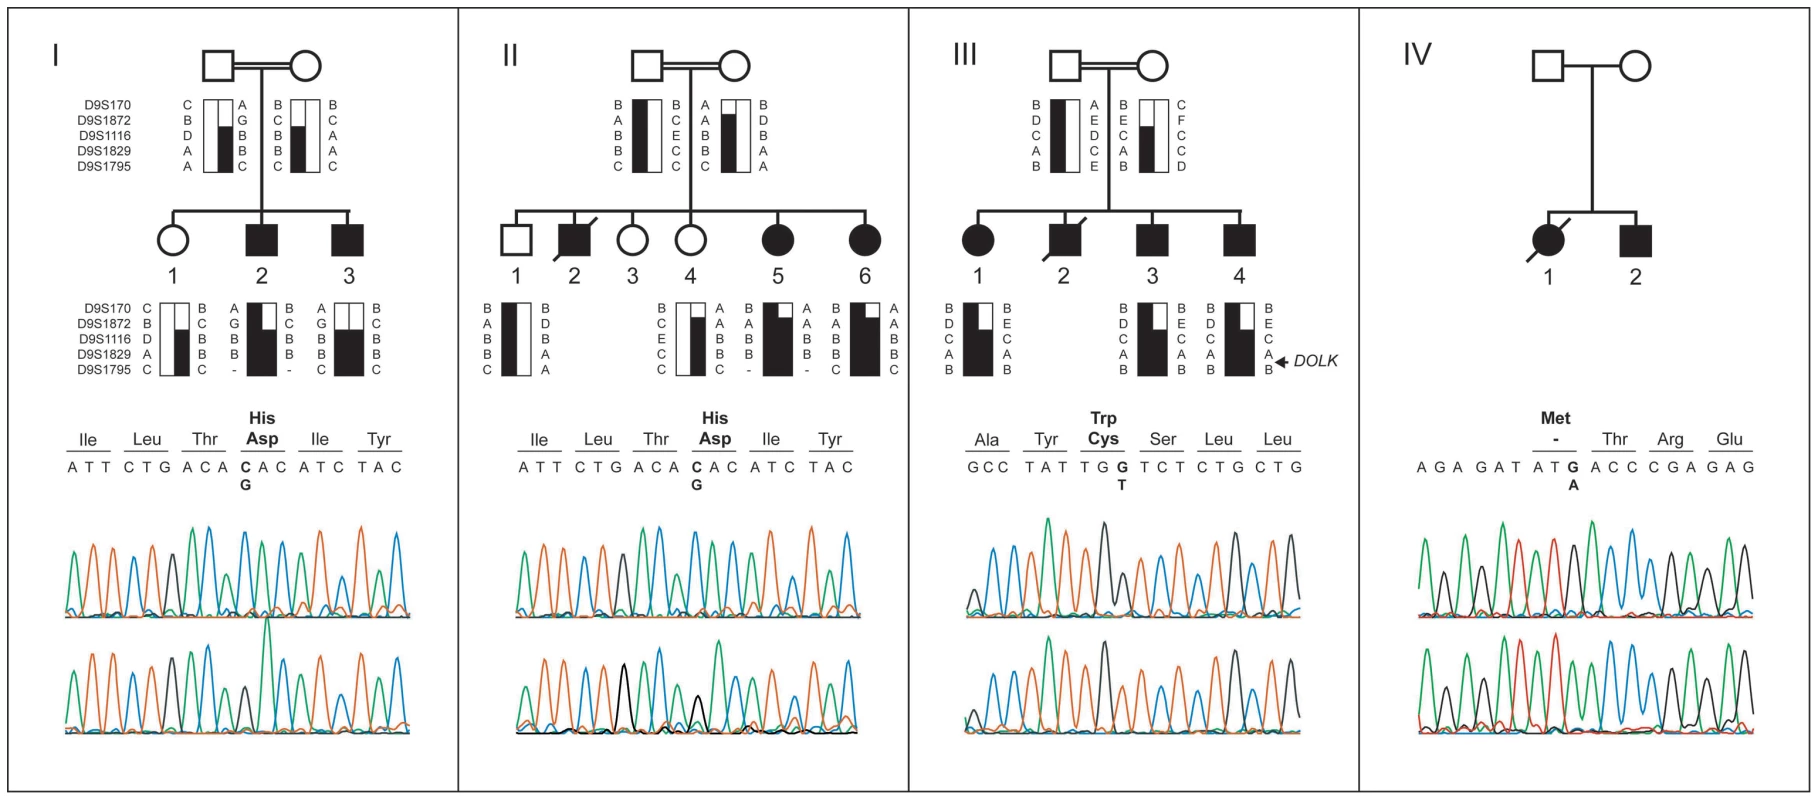 Pedigrees, haplotypes, and mutation analysis of families I through IV.